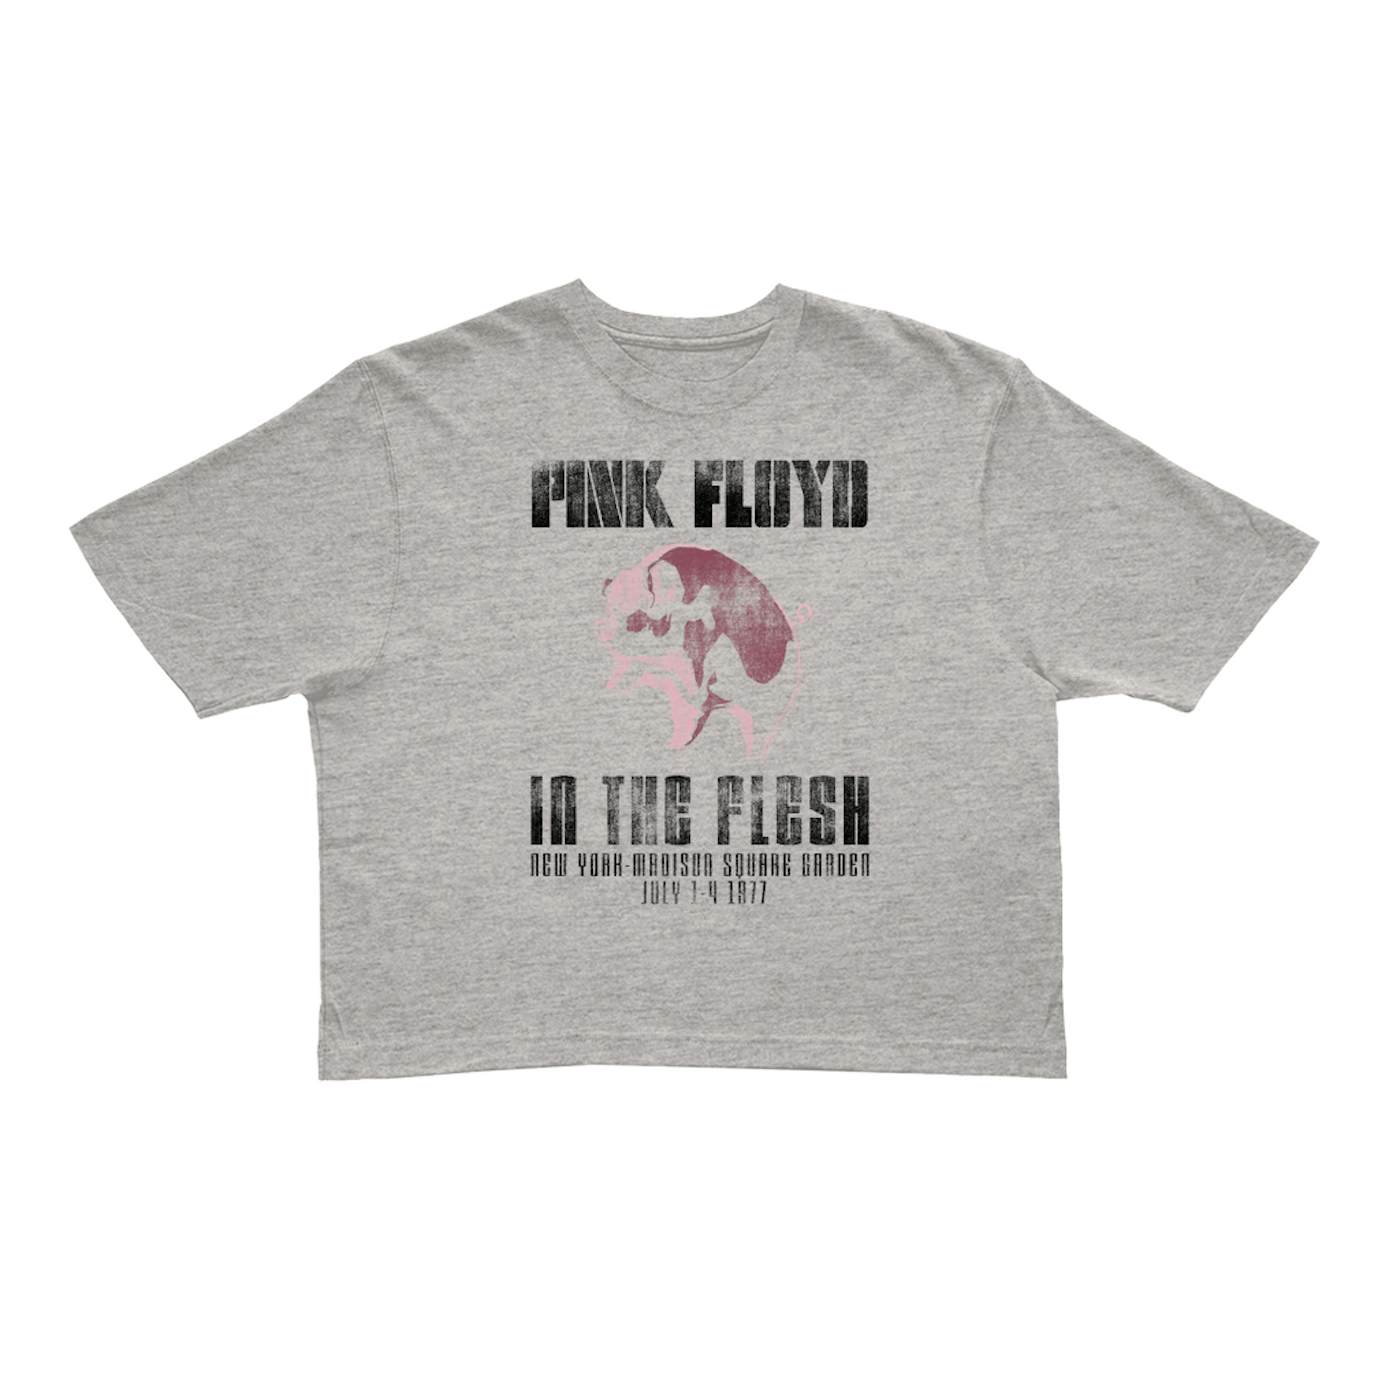 Pink Floyd Ladies' Crop Tee | In The Flesh 1977 NYC Madison Square Garden Concert Pink Floyd Crop T-shirt